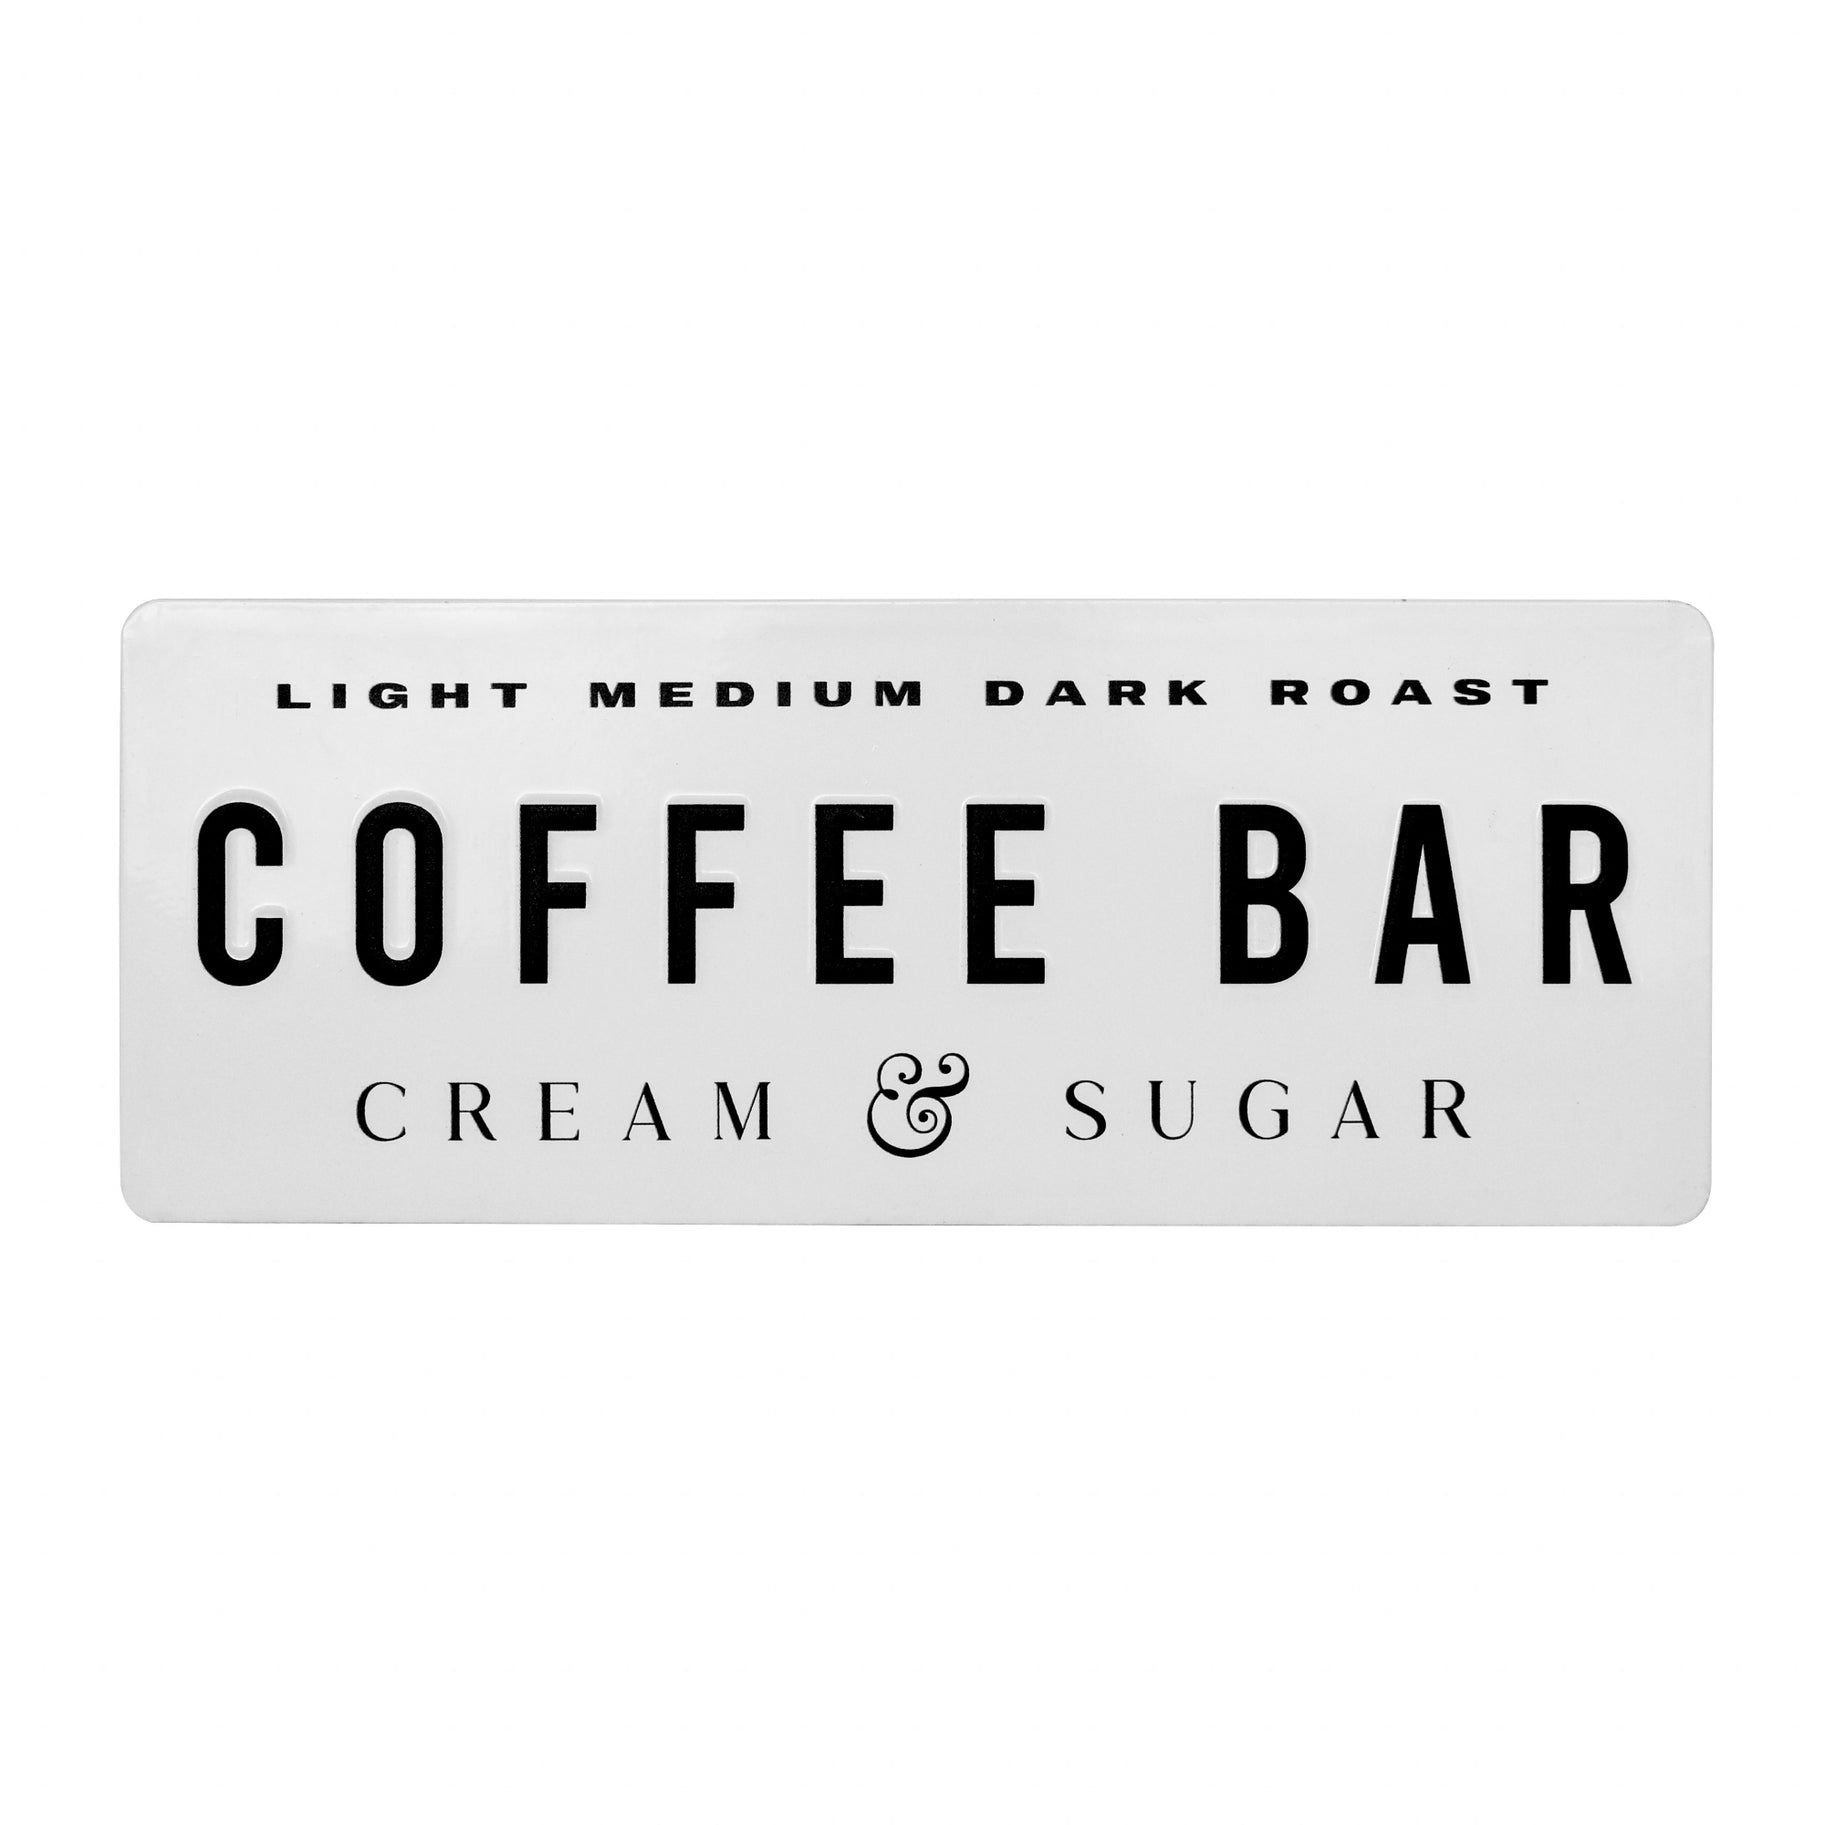 Coffee Bar Metal Sign 5x12"